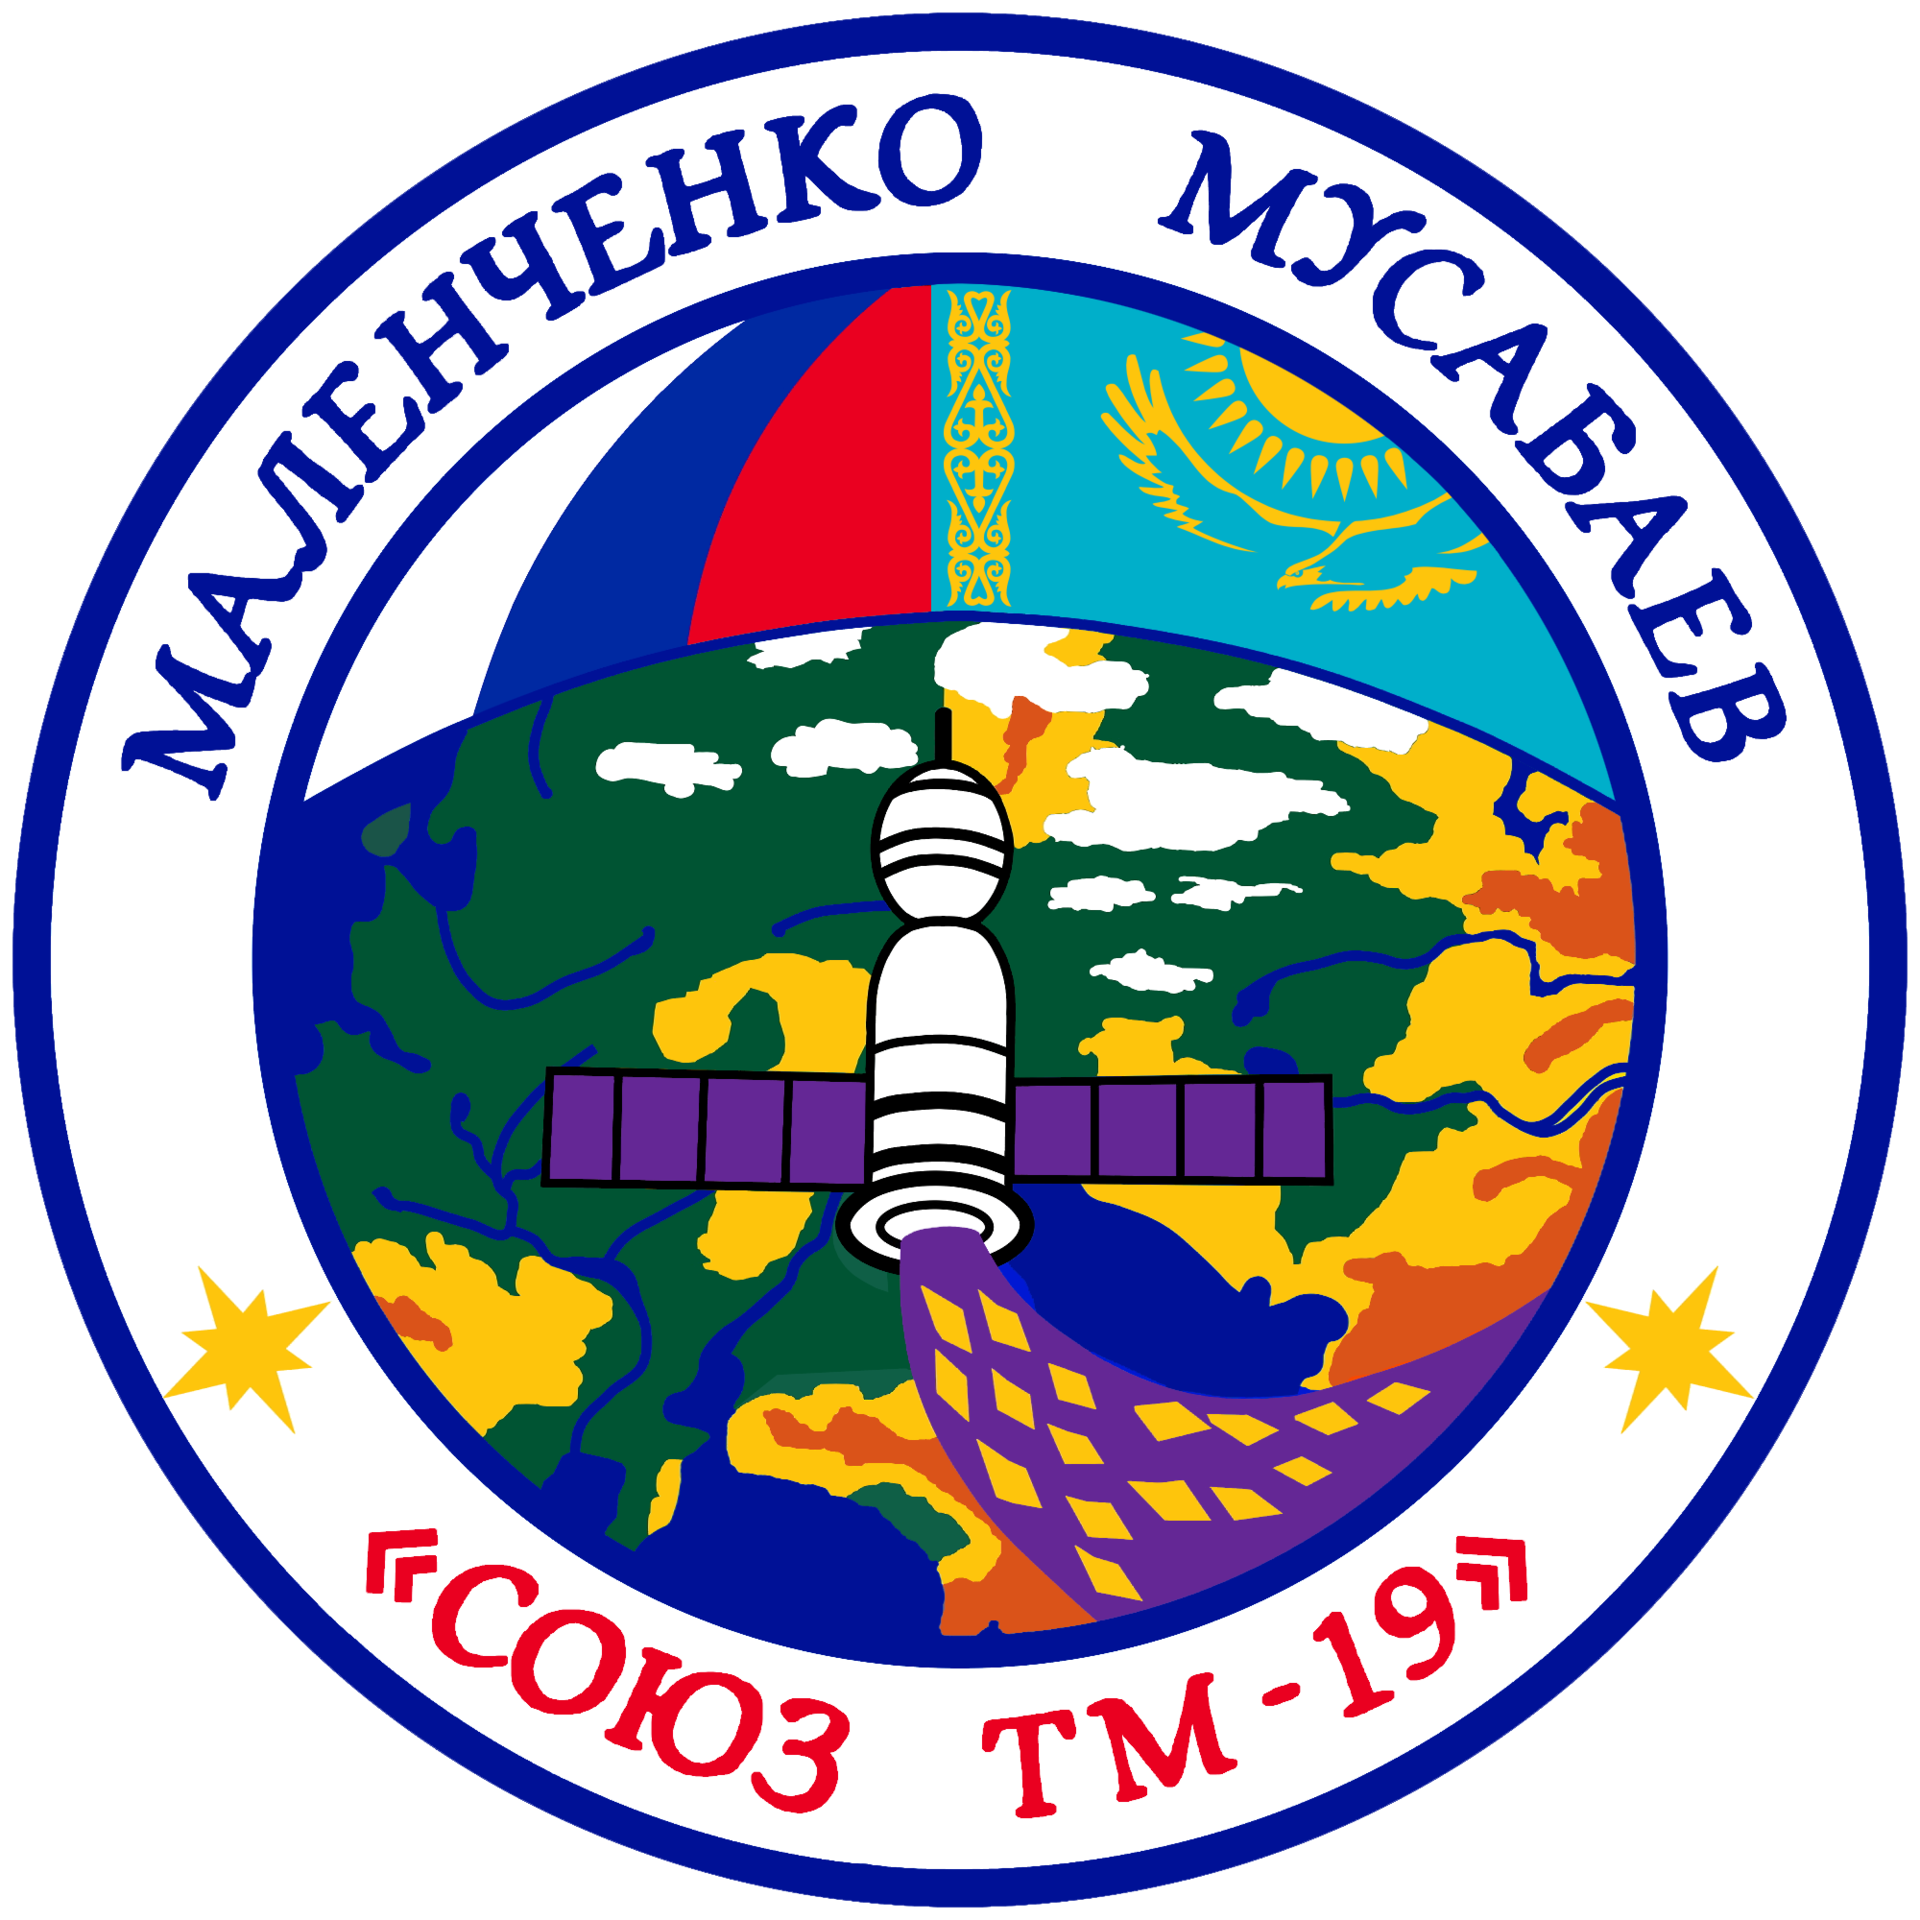 Mission patch for Soyuz TM-19